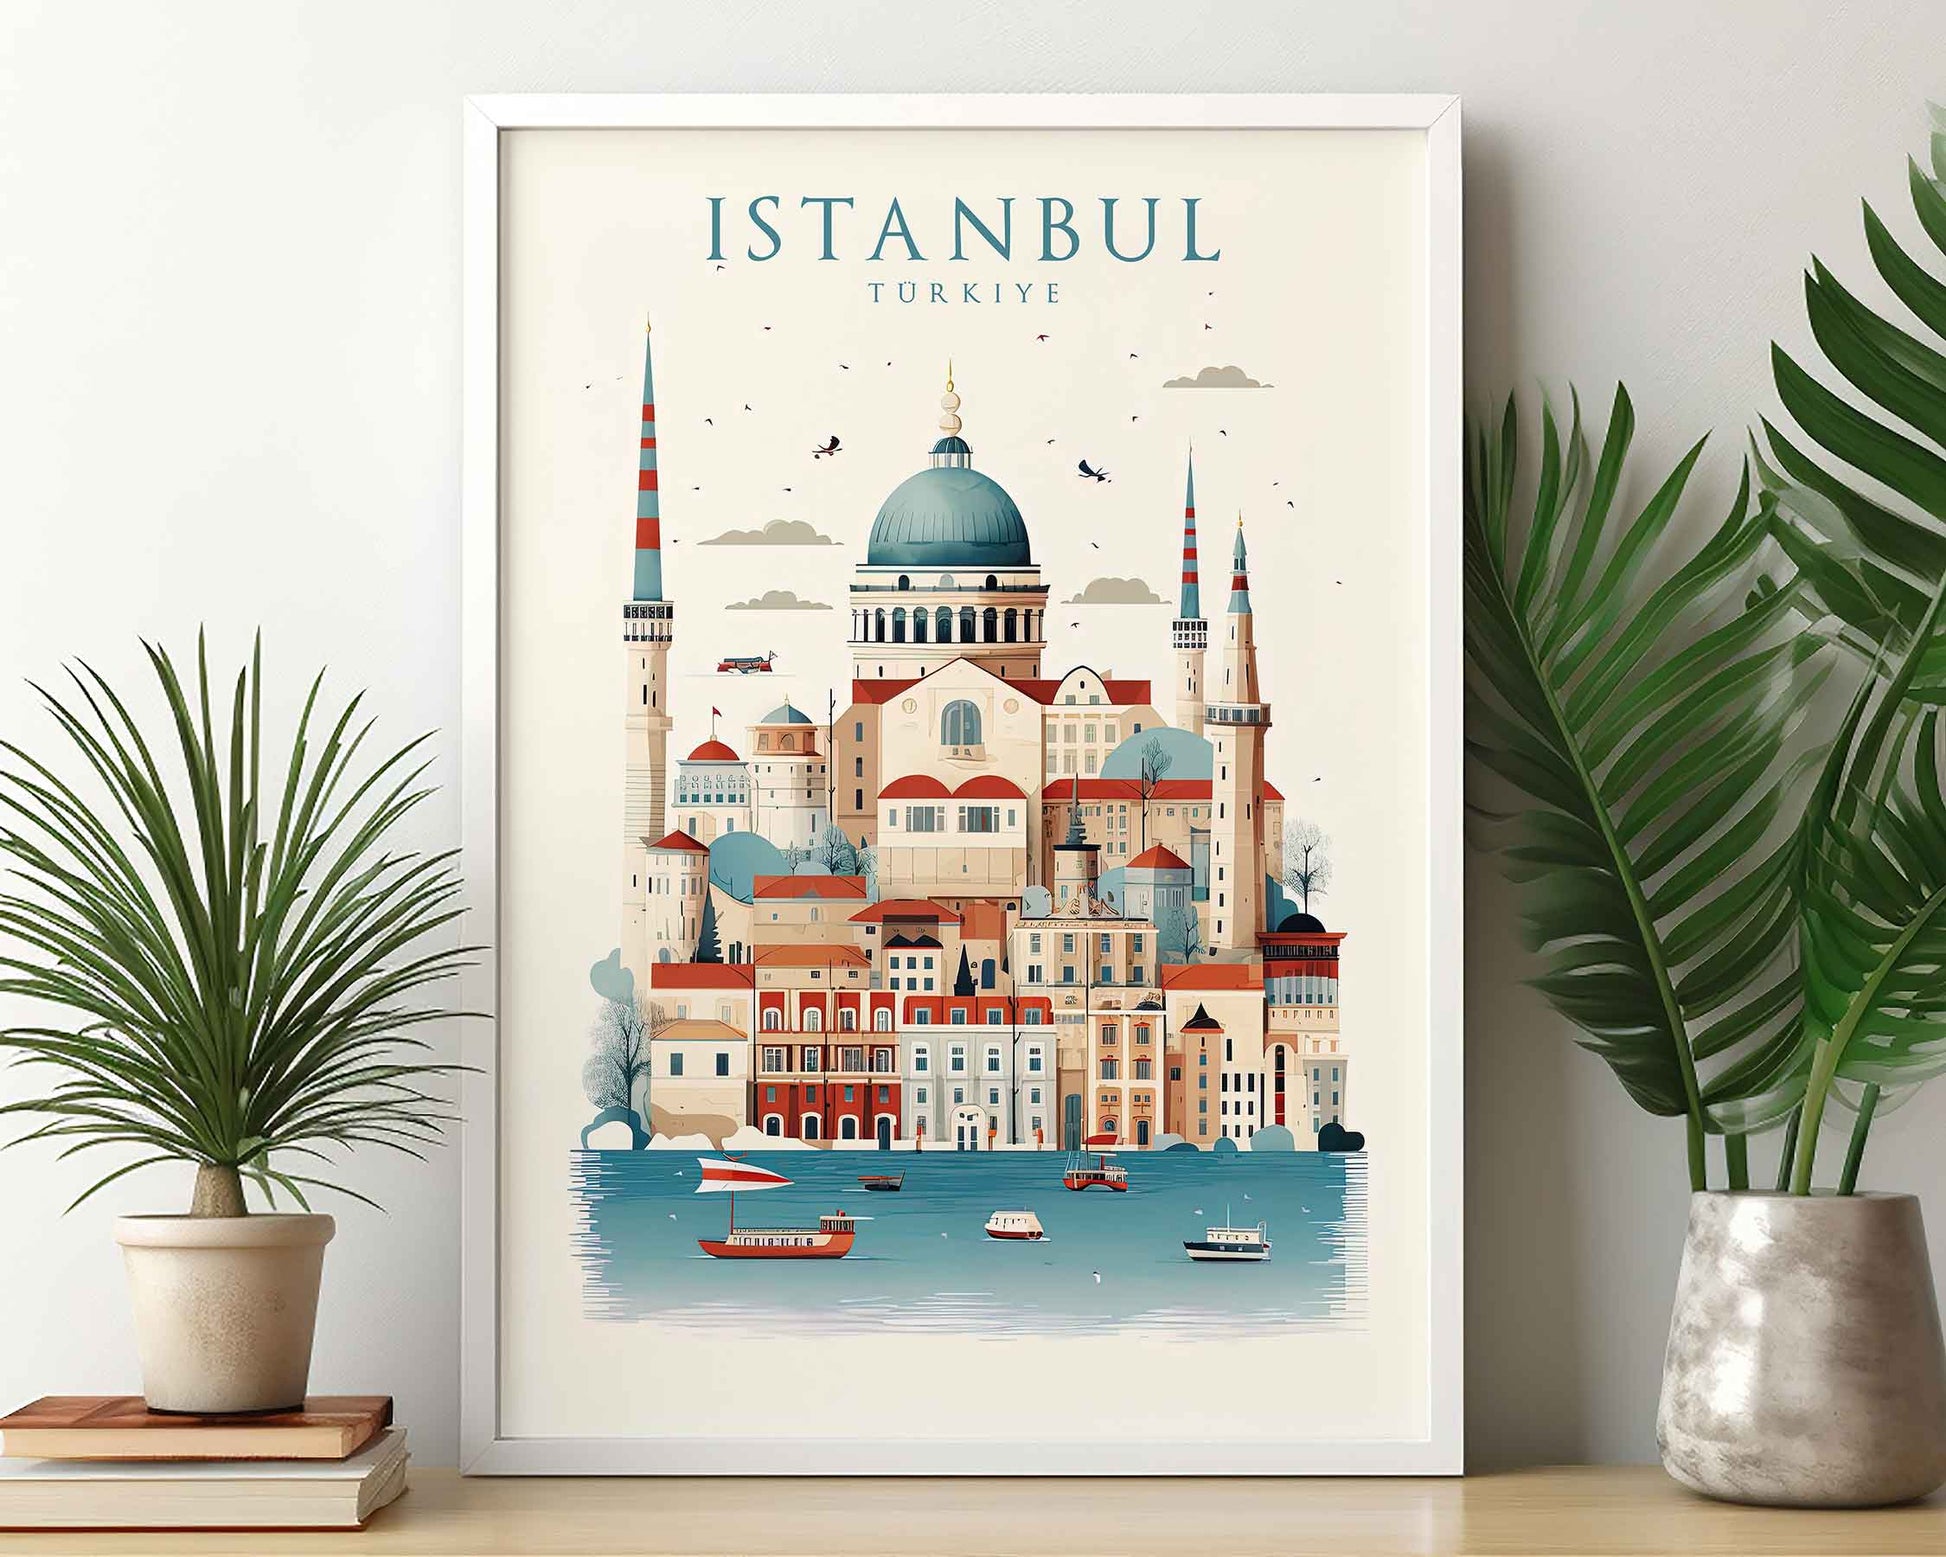 Framed Image of Istanbul Turkey Travel Poster Illustration Prints Wall Art